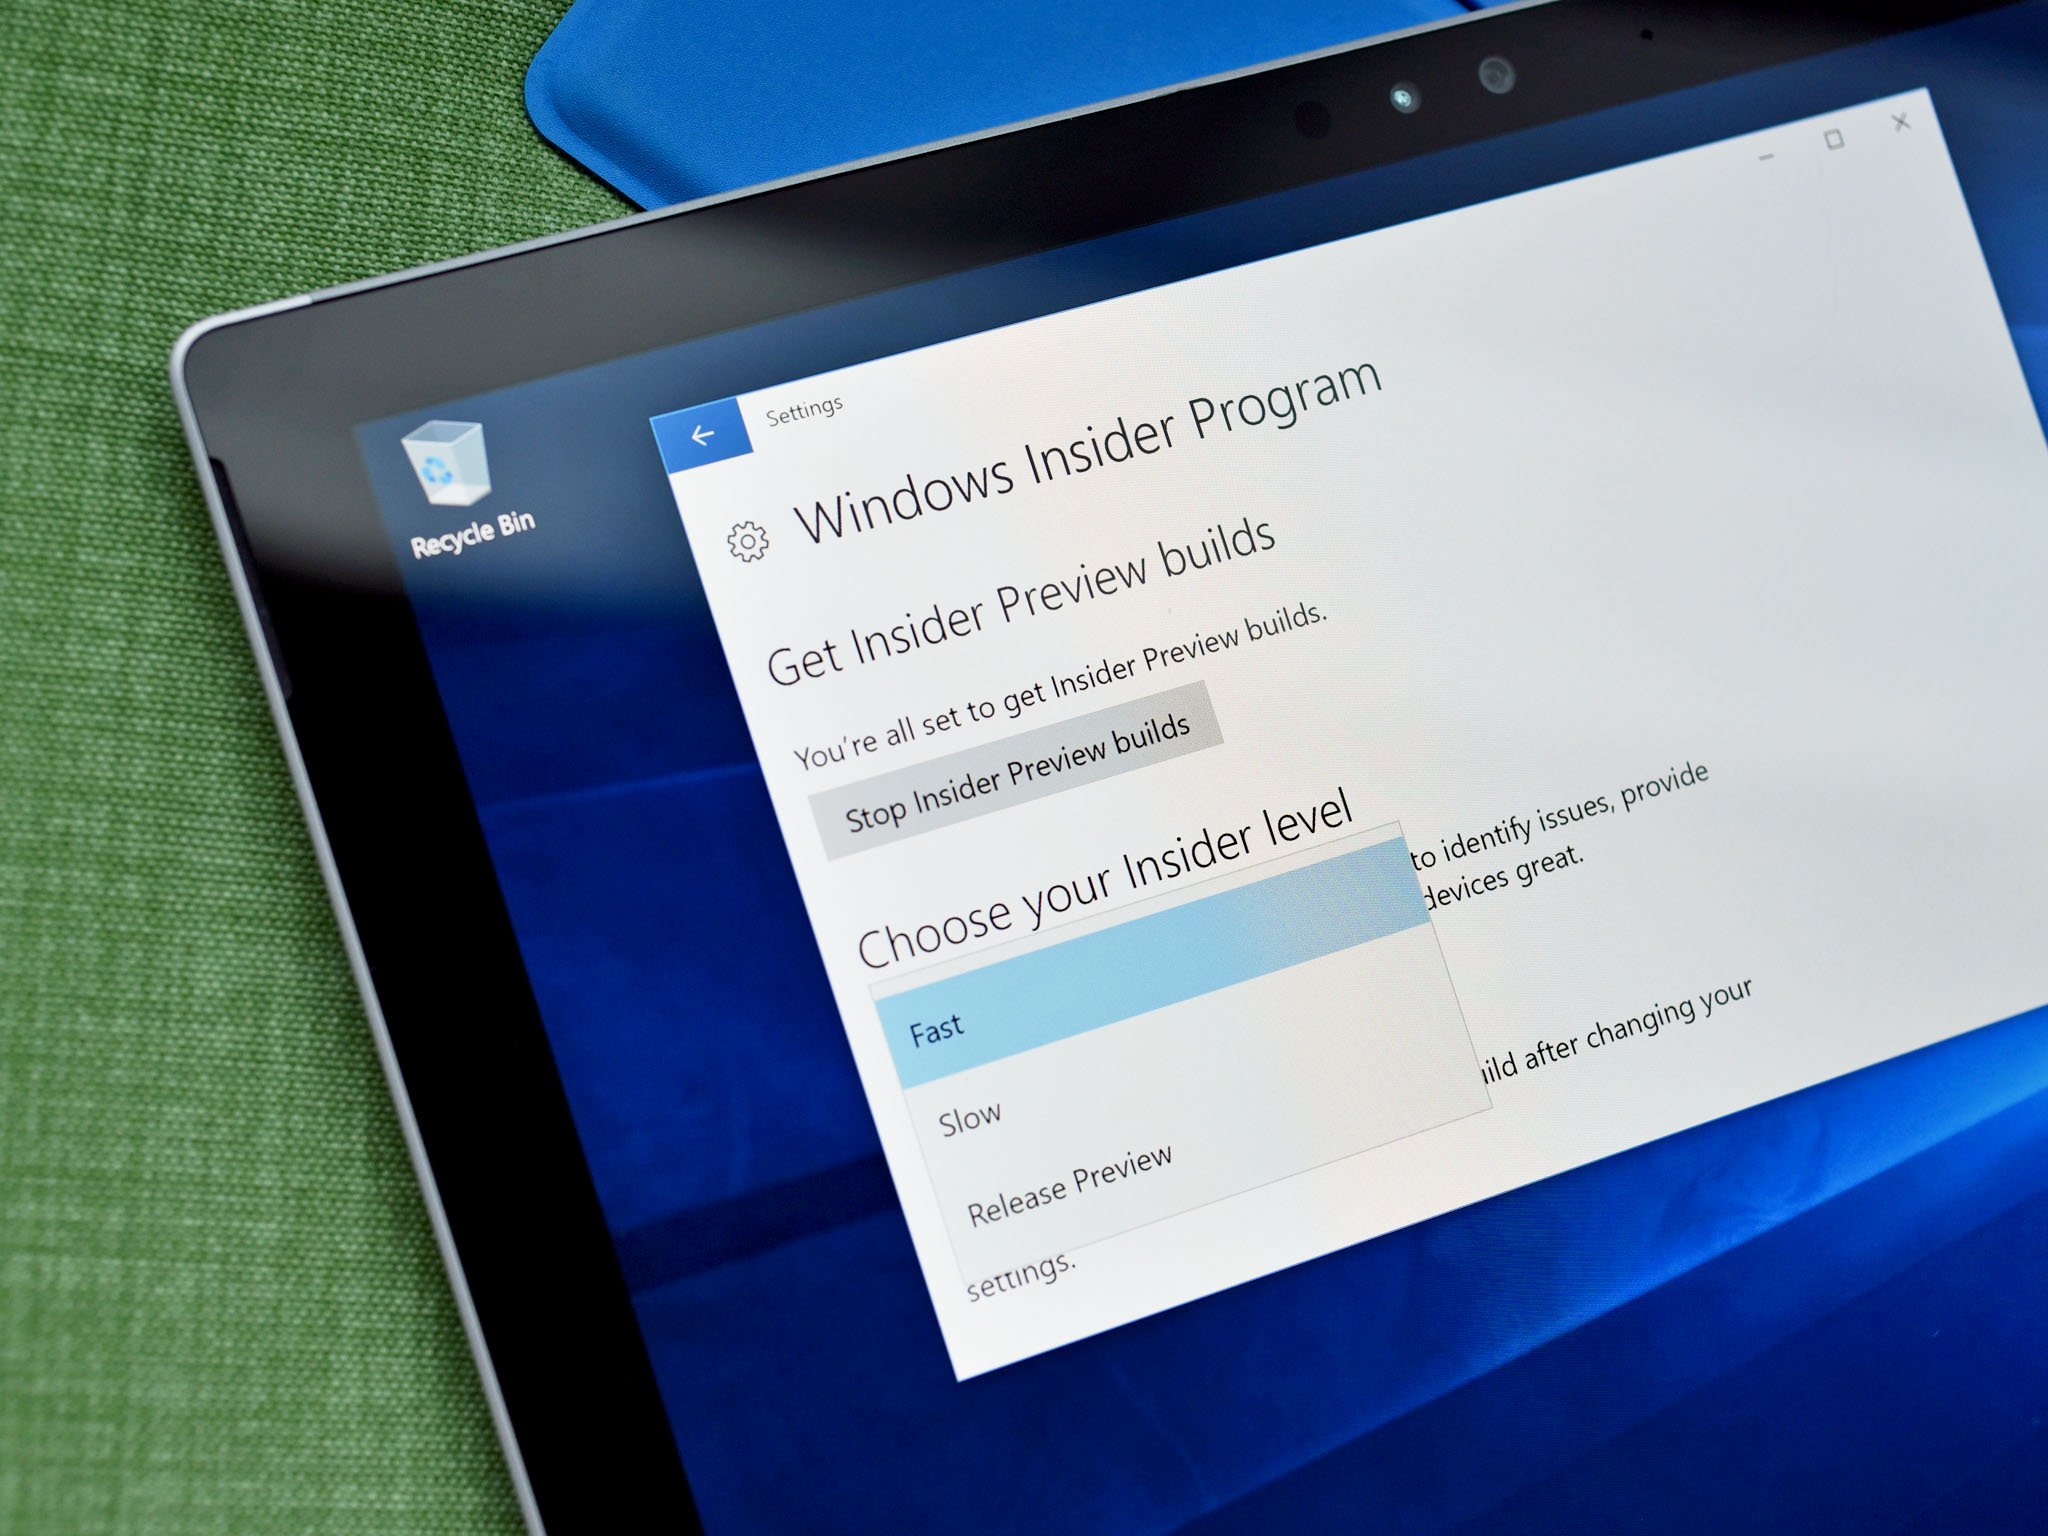 Microsoft txt. Windows Insider. Windows 10 (Insider builds). Windows Insider program 10. Windows Insider Preview.